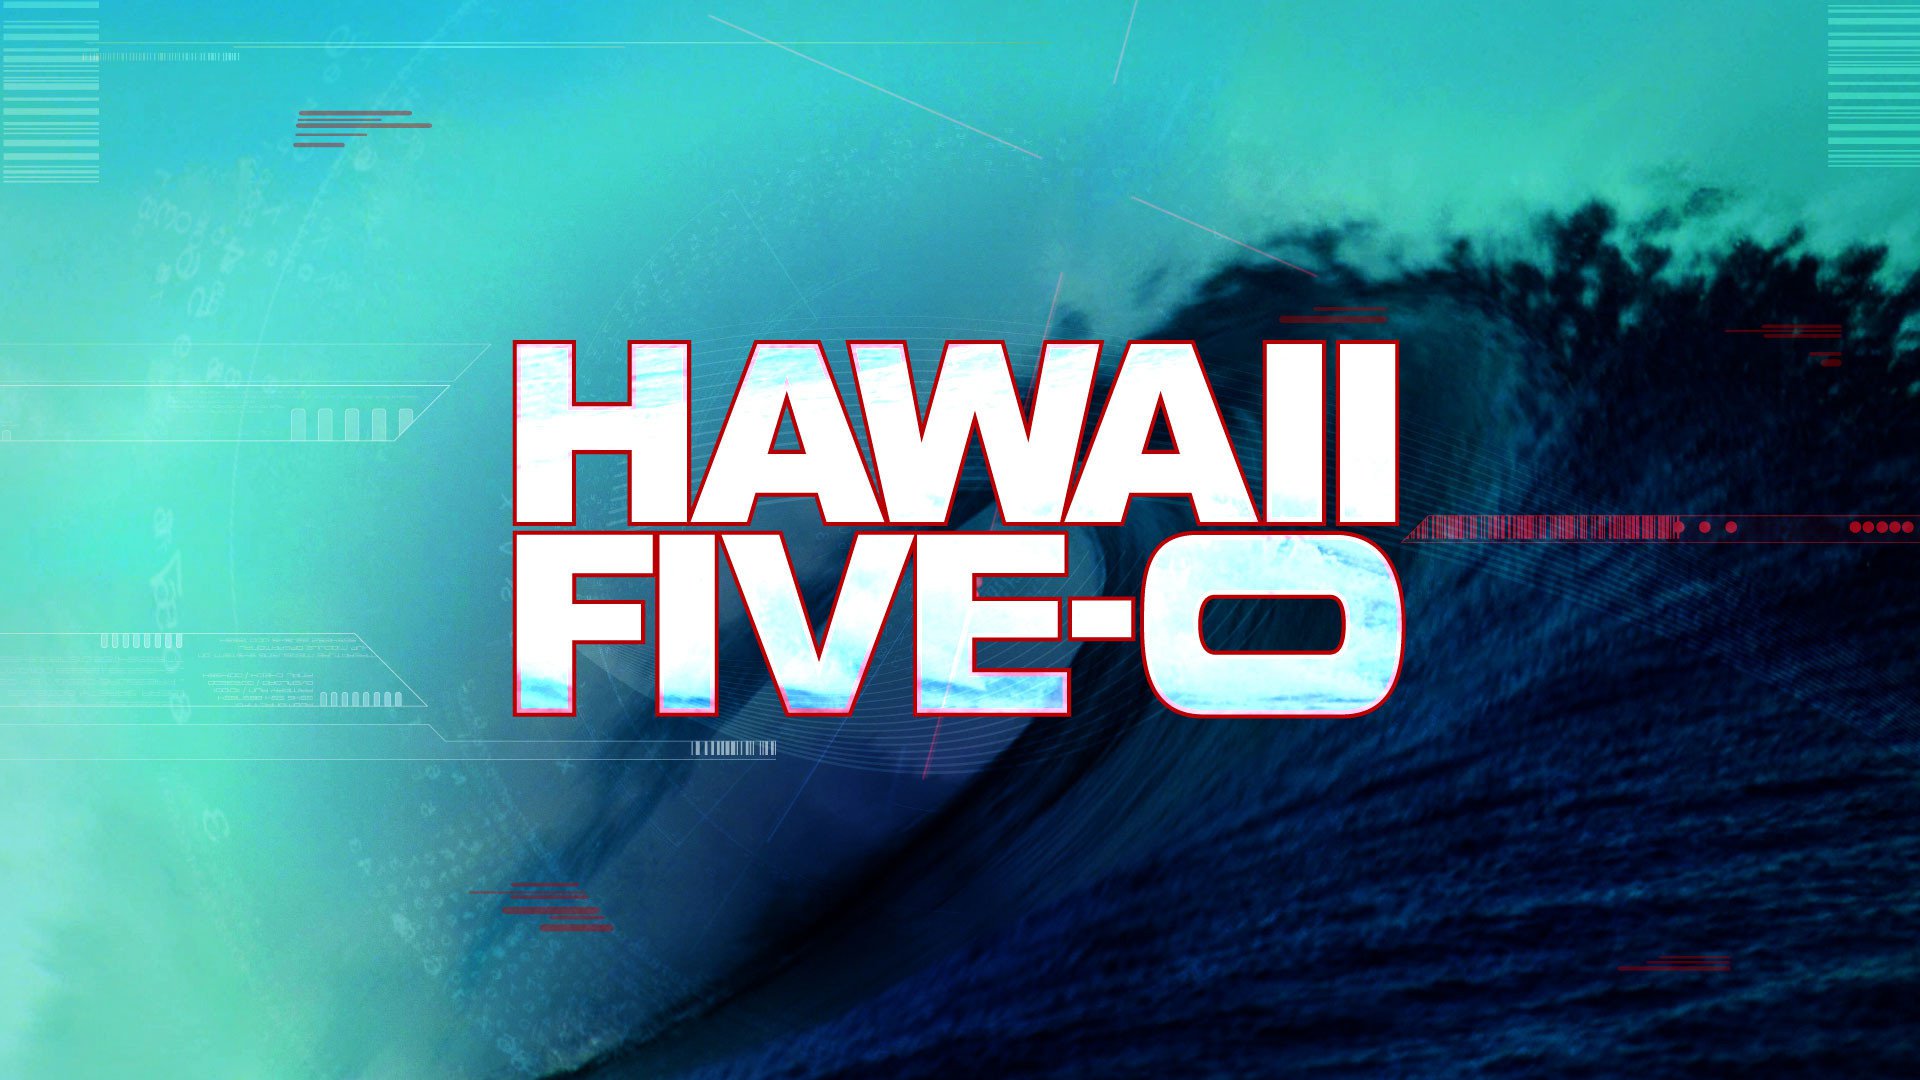 Télécharger des fonds d'écran Hawaii 5 0 HD